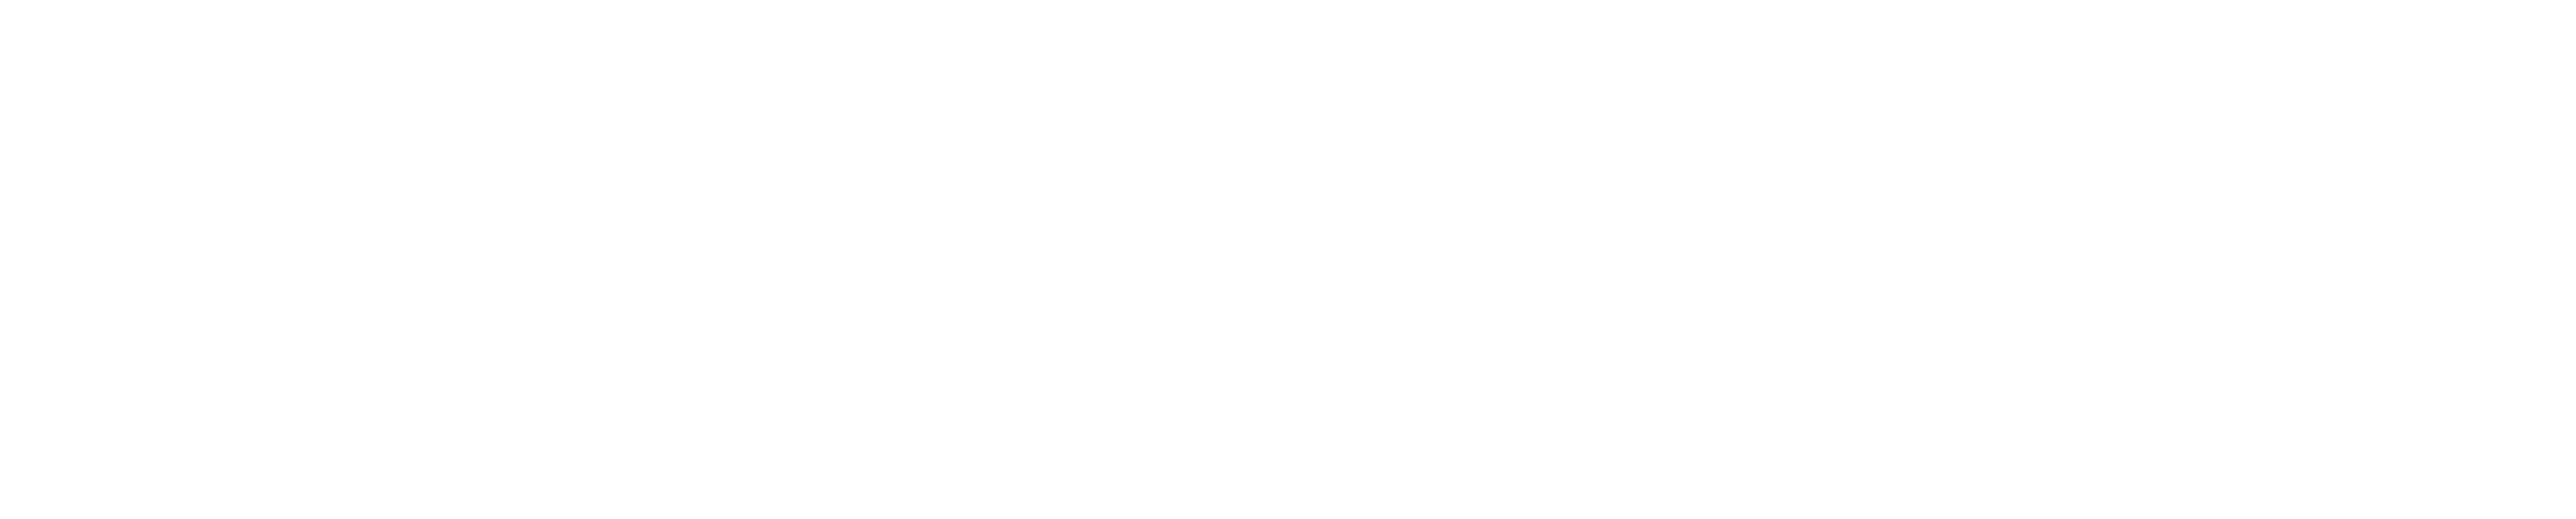 Kunes Mercedes-Benz of Sycamore-logo